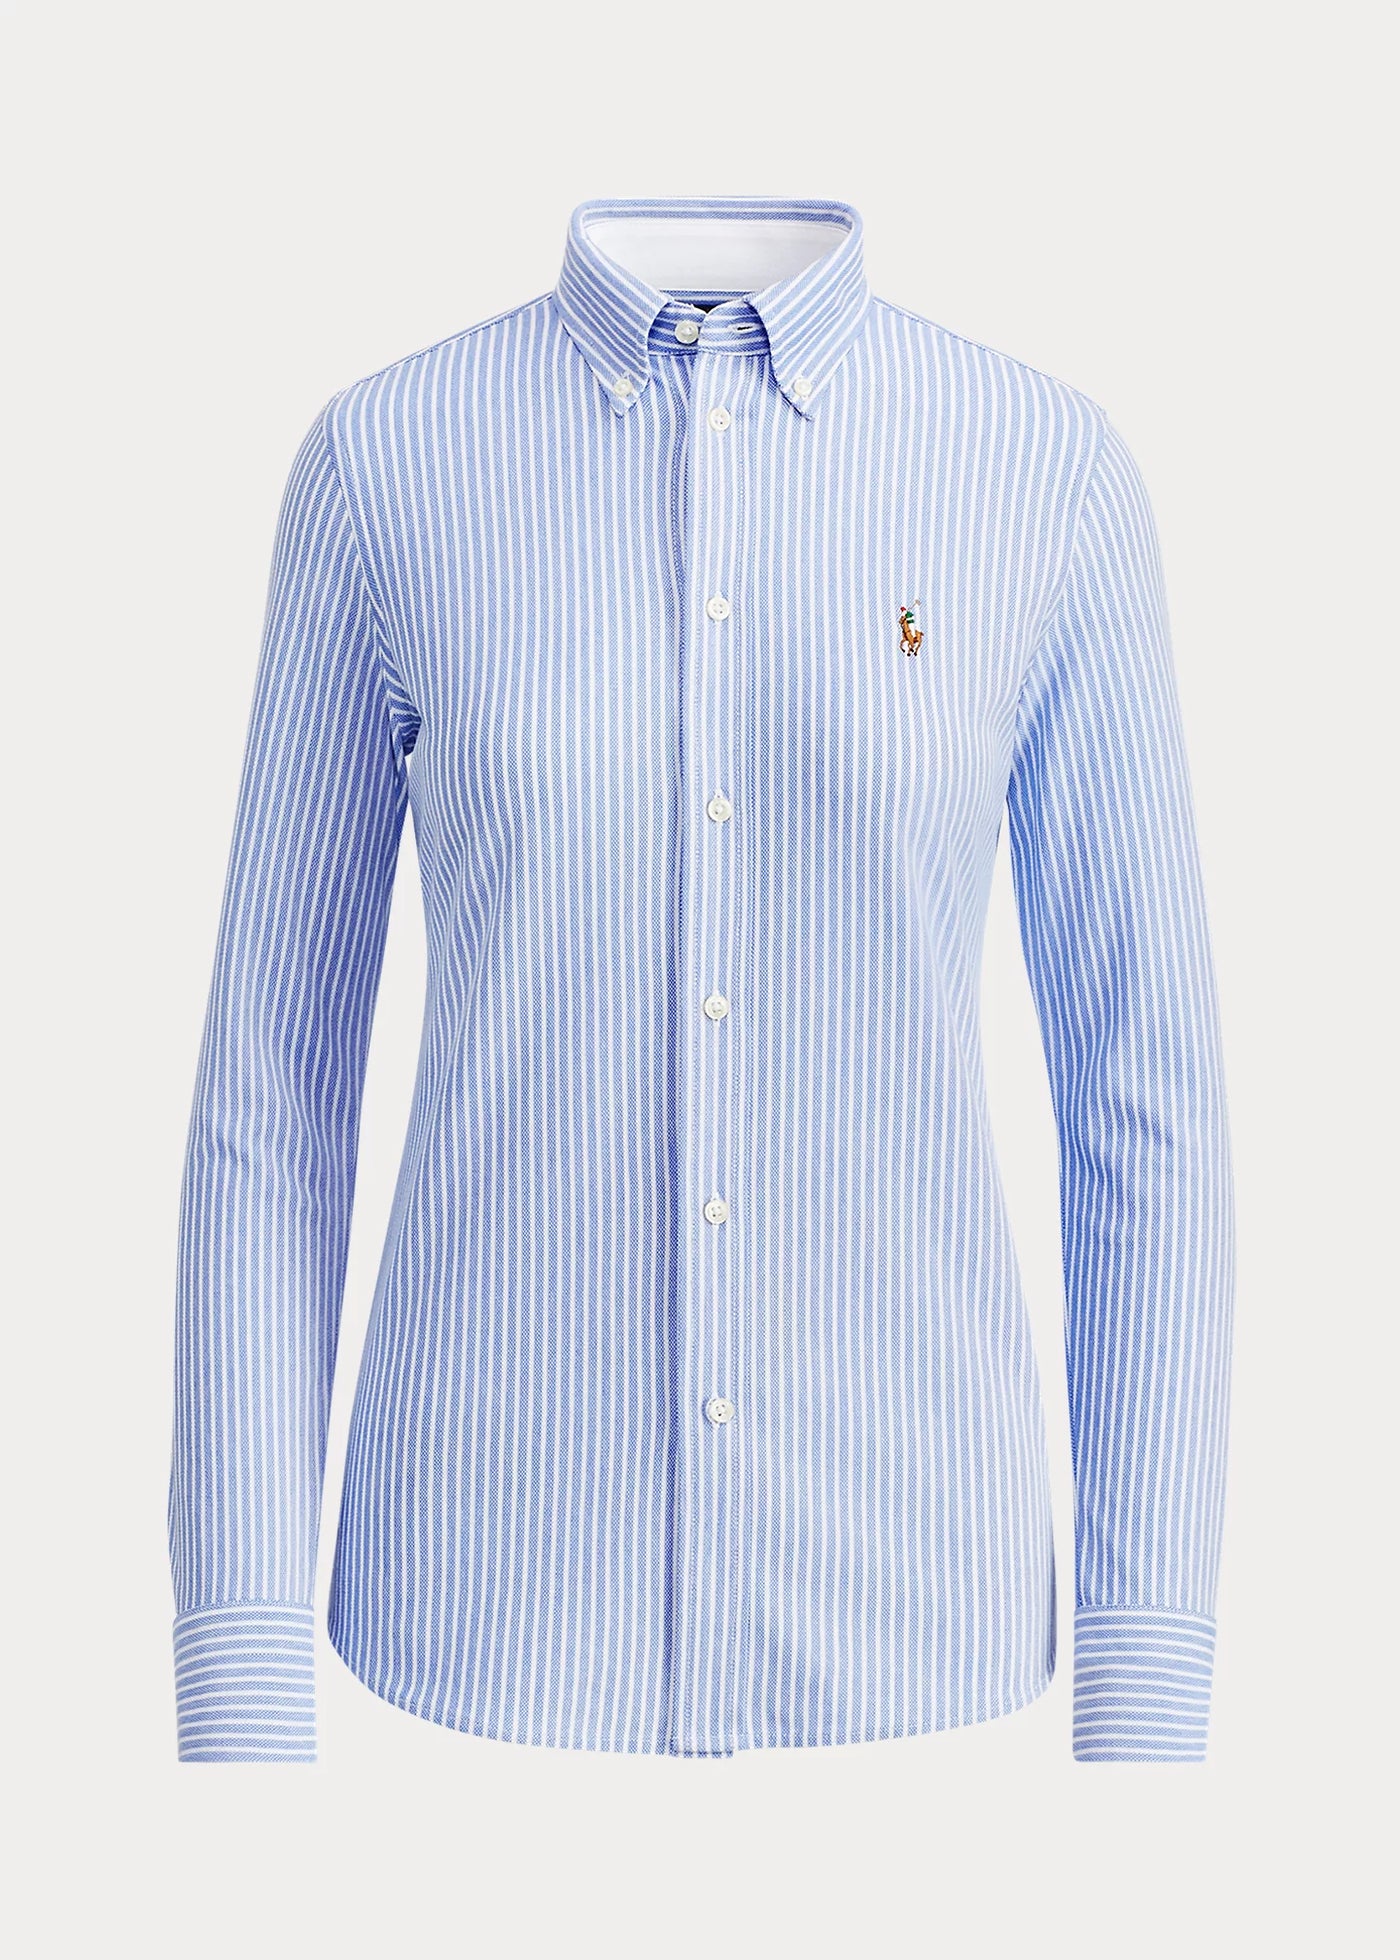 Ralph Lauren Striped Knit Oxford Shirt | Blue/White